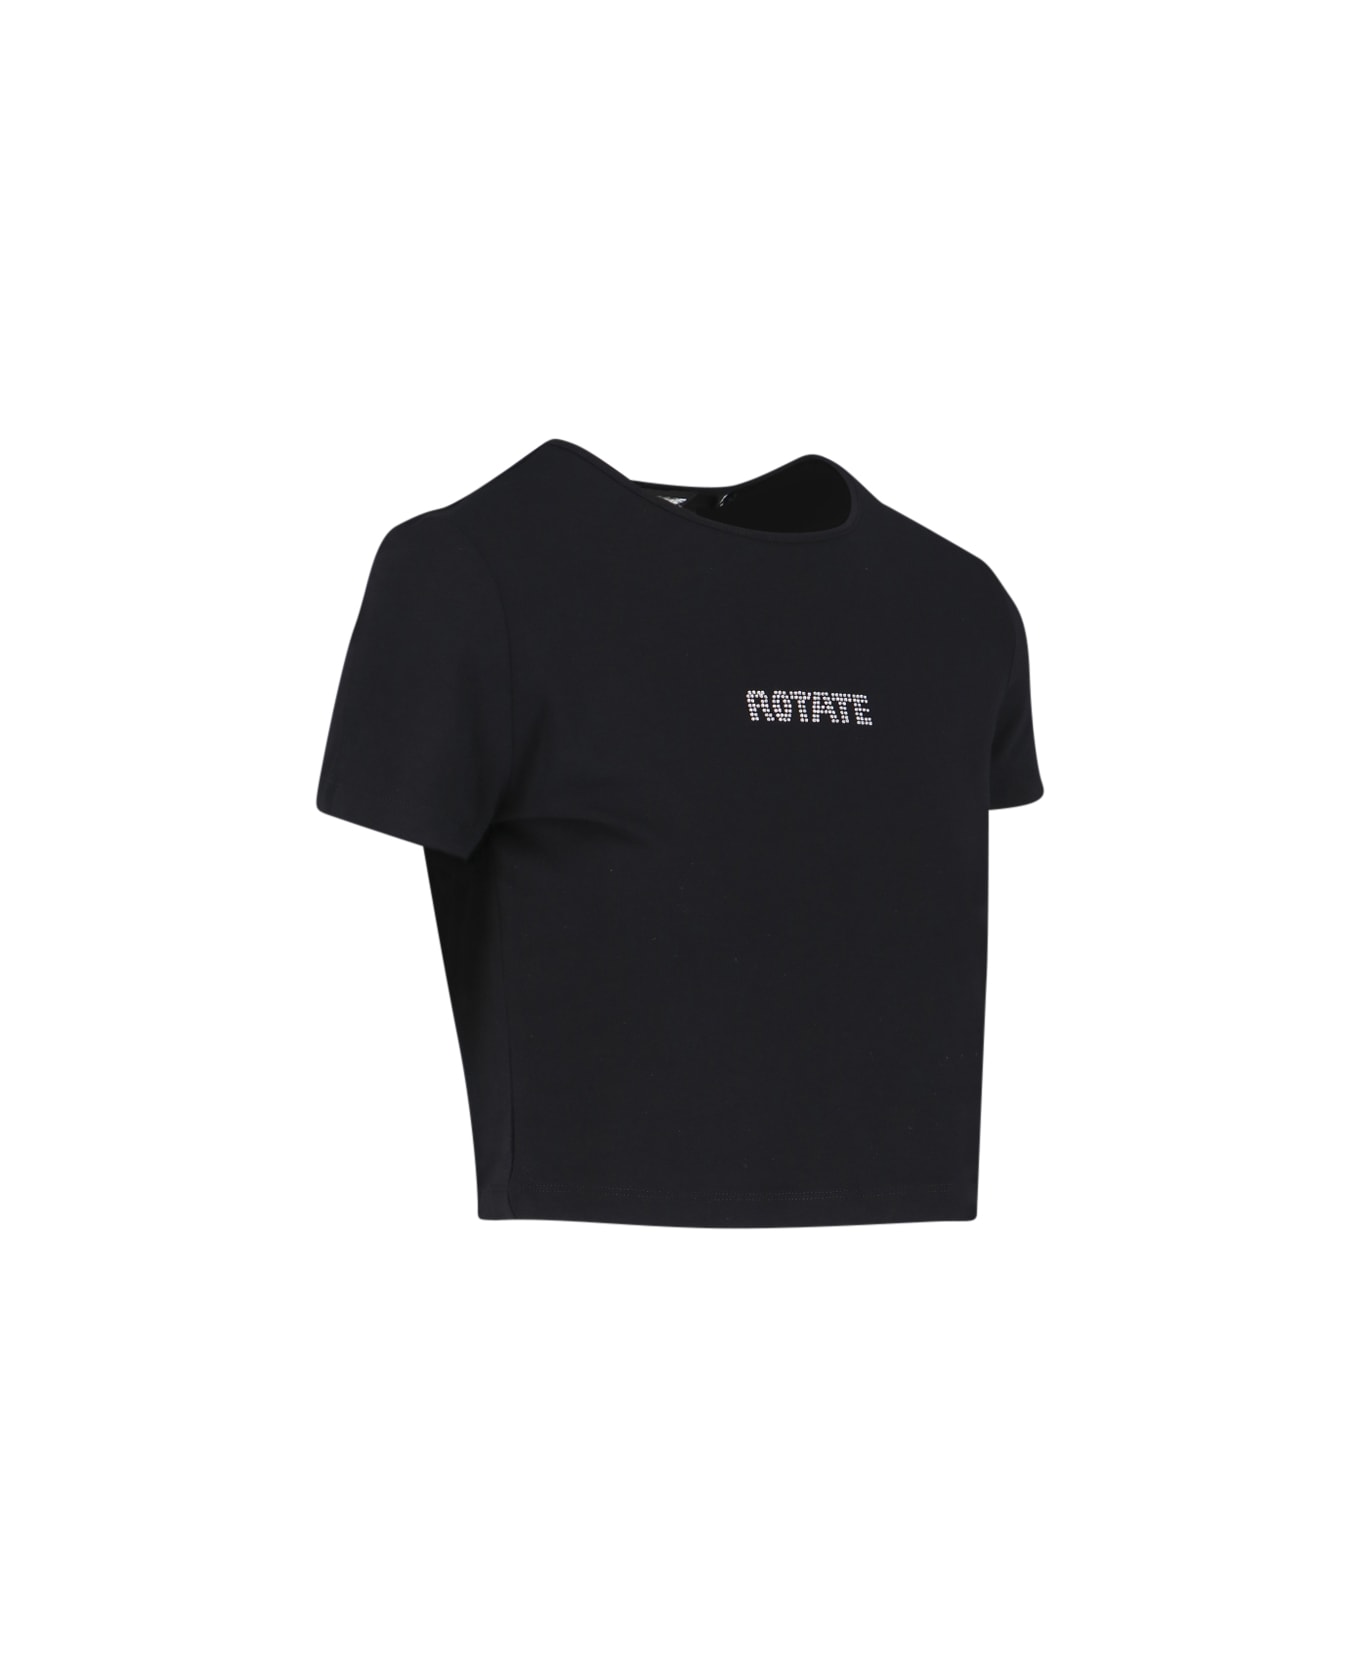 Rotate by Birger Christensen Logo Crop T-shirt - Black   Tシャツ